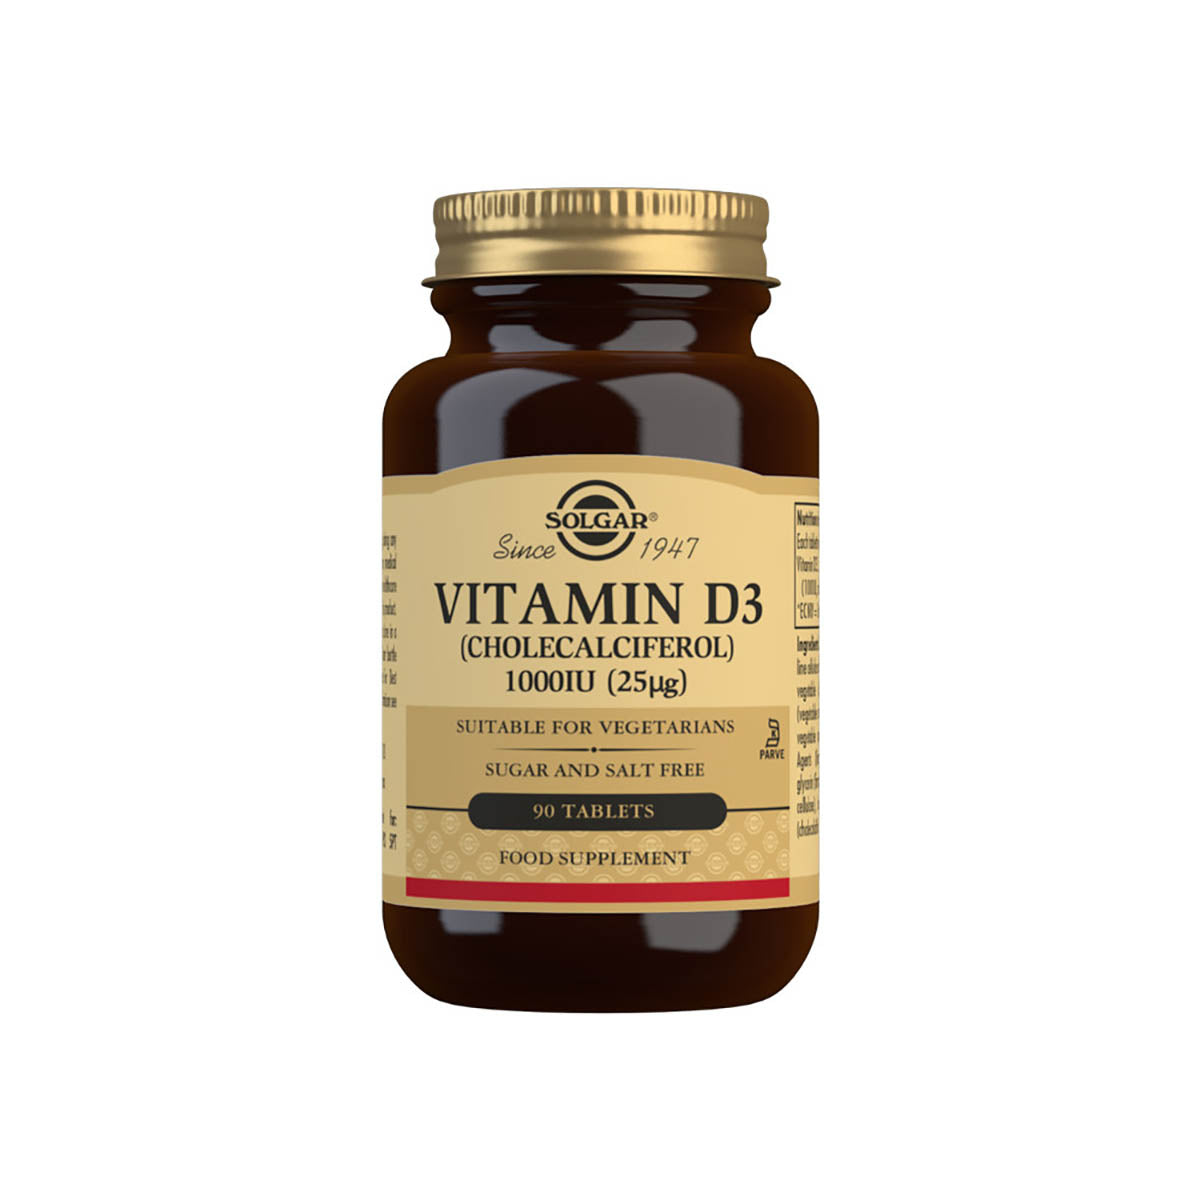 Solgar® Vitamin D3 (Cholecalciferol) 1000 IU (25 µg) Tablets - Pack of 90